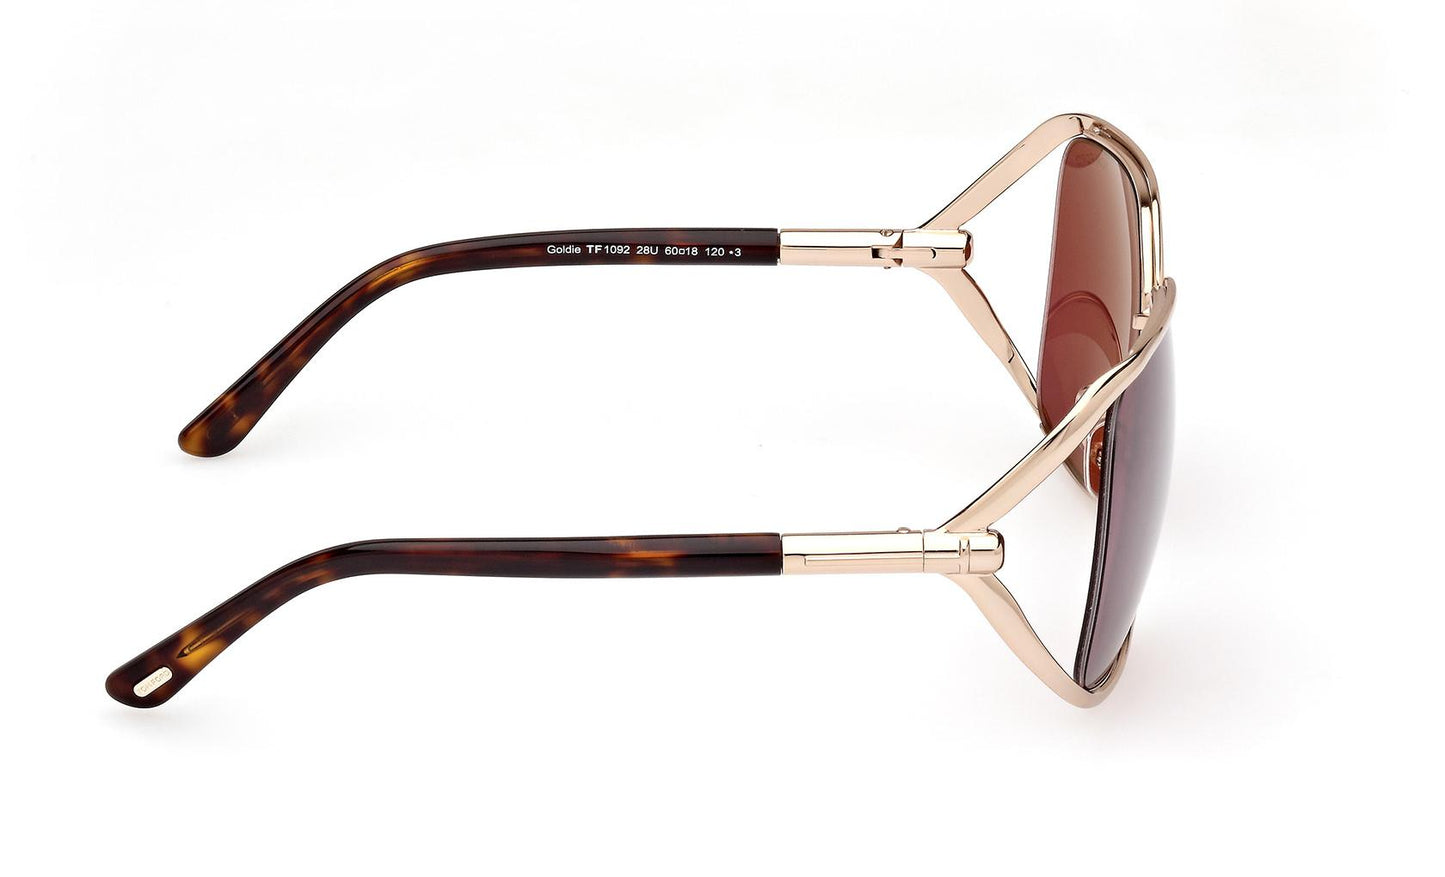 Tom Ford Goldie Sunglasses FT1092 28U